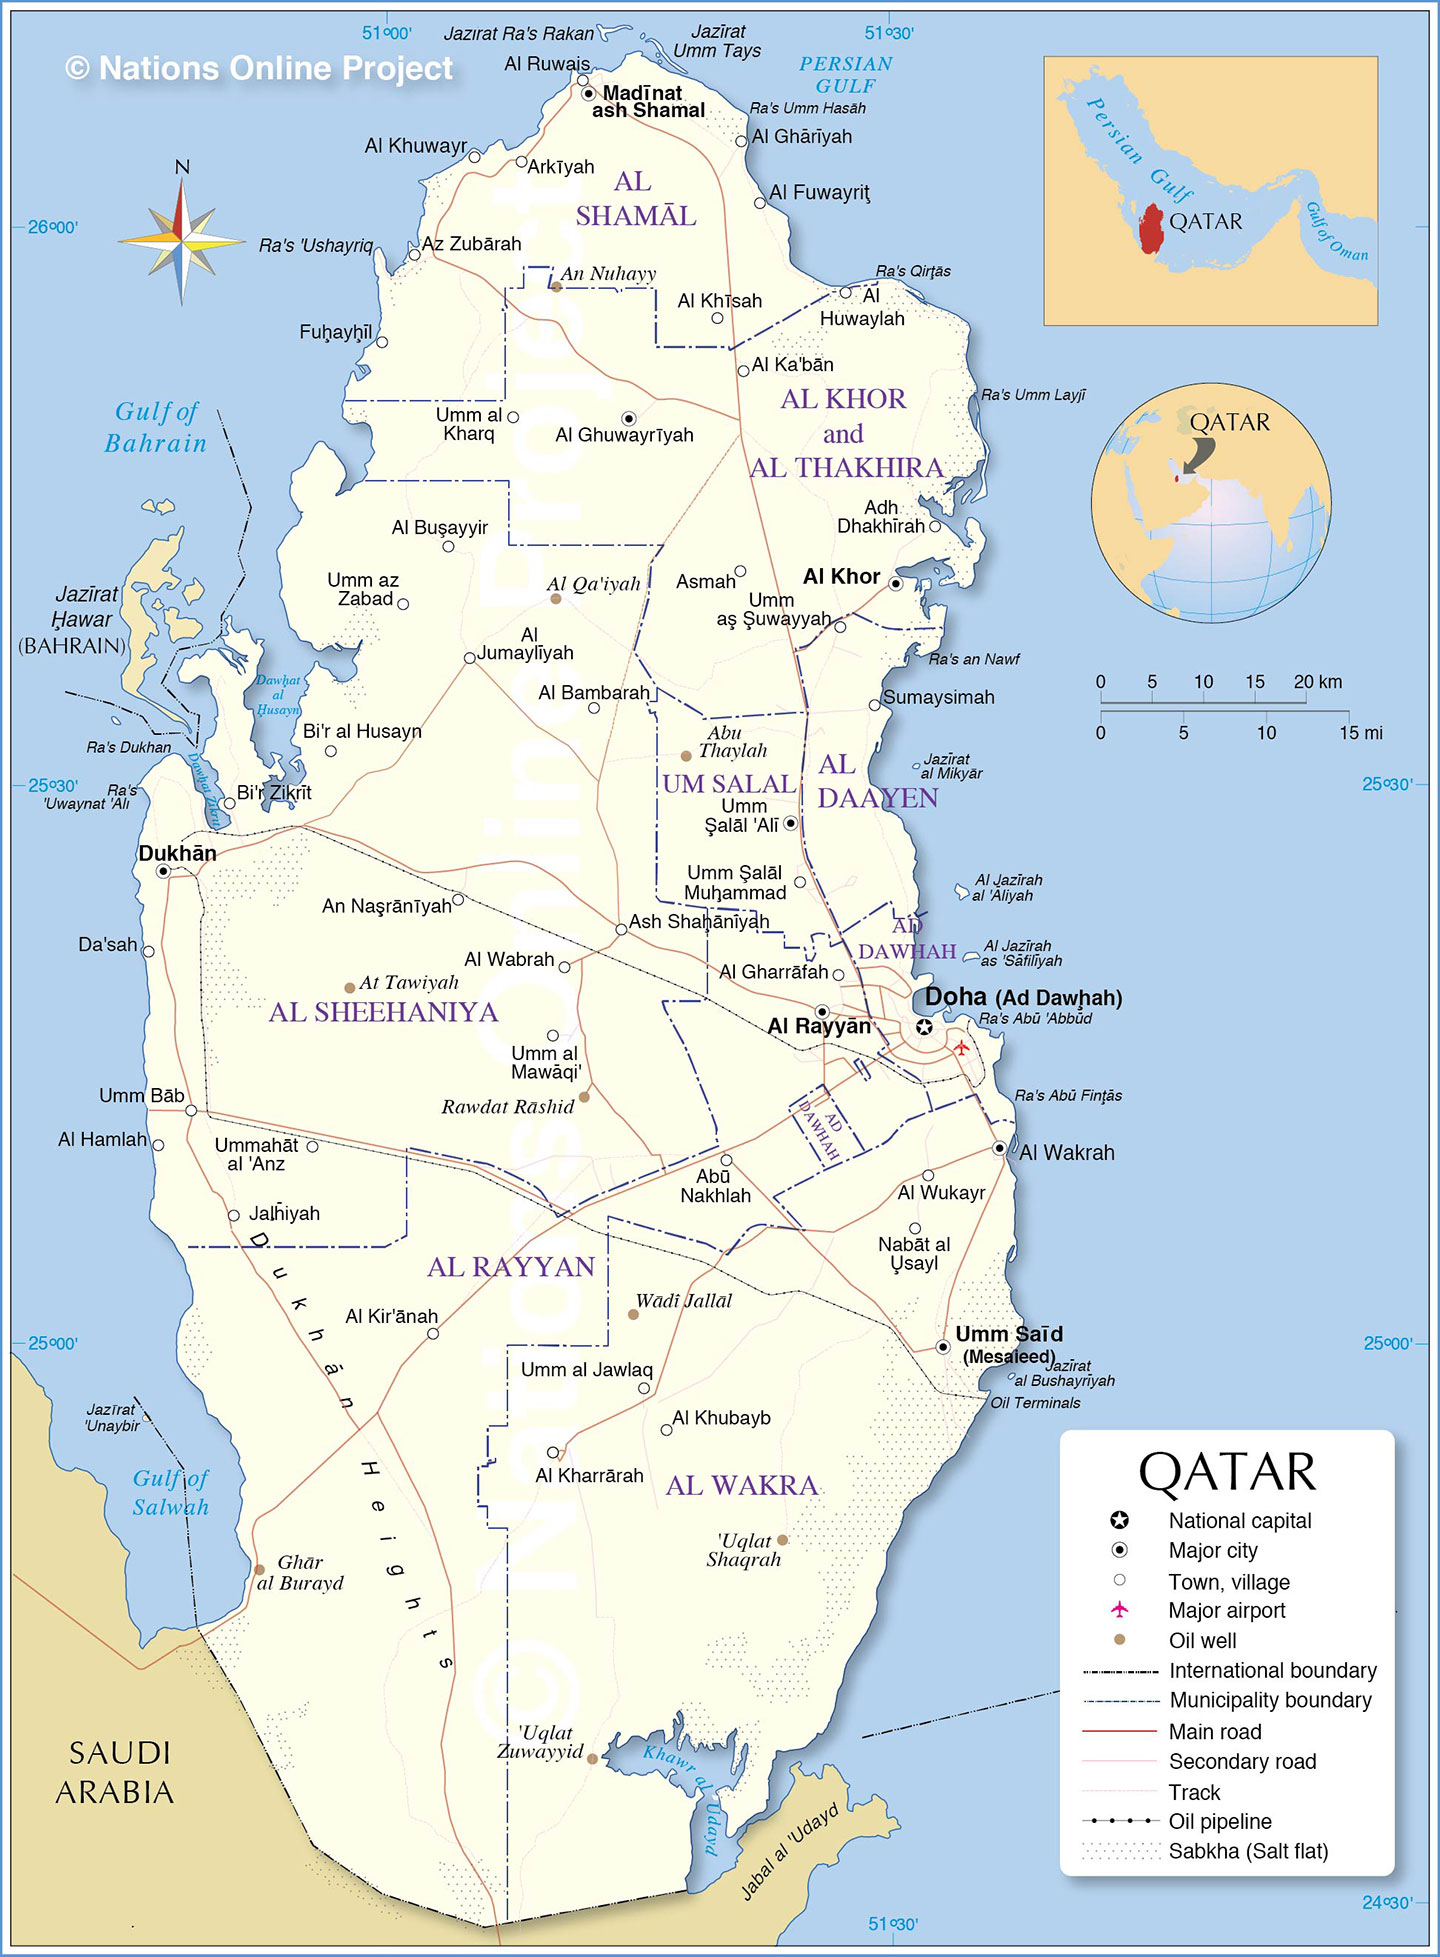 Qatar Map showing Municipalities of Qatar